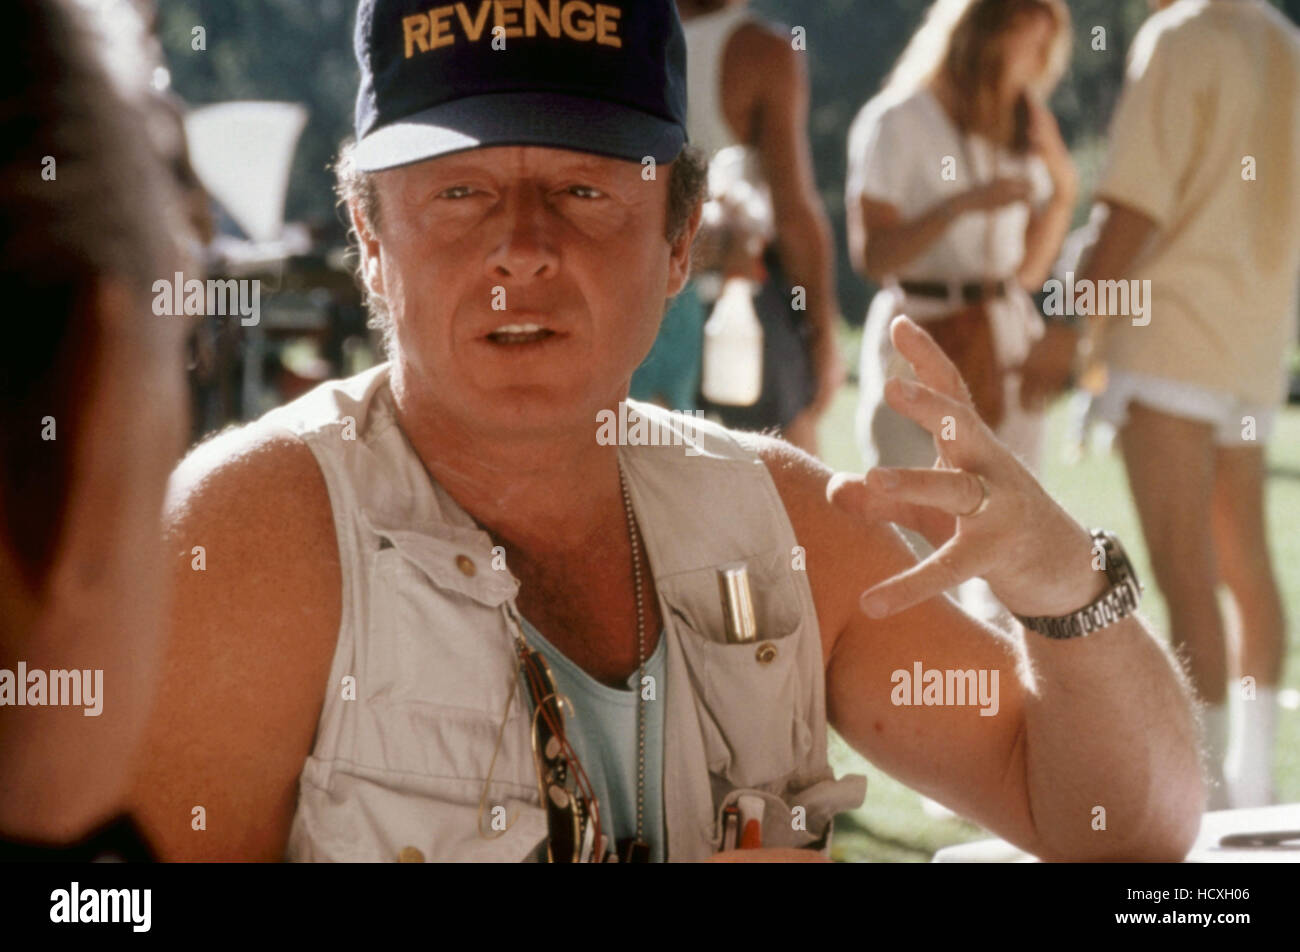 REVENGE, director Tony Scott, on set, 1990. ©Columbia Pictures/Courtesy Everett Collection. Stock Photo